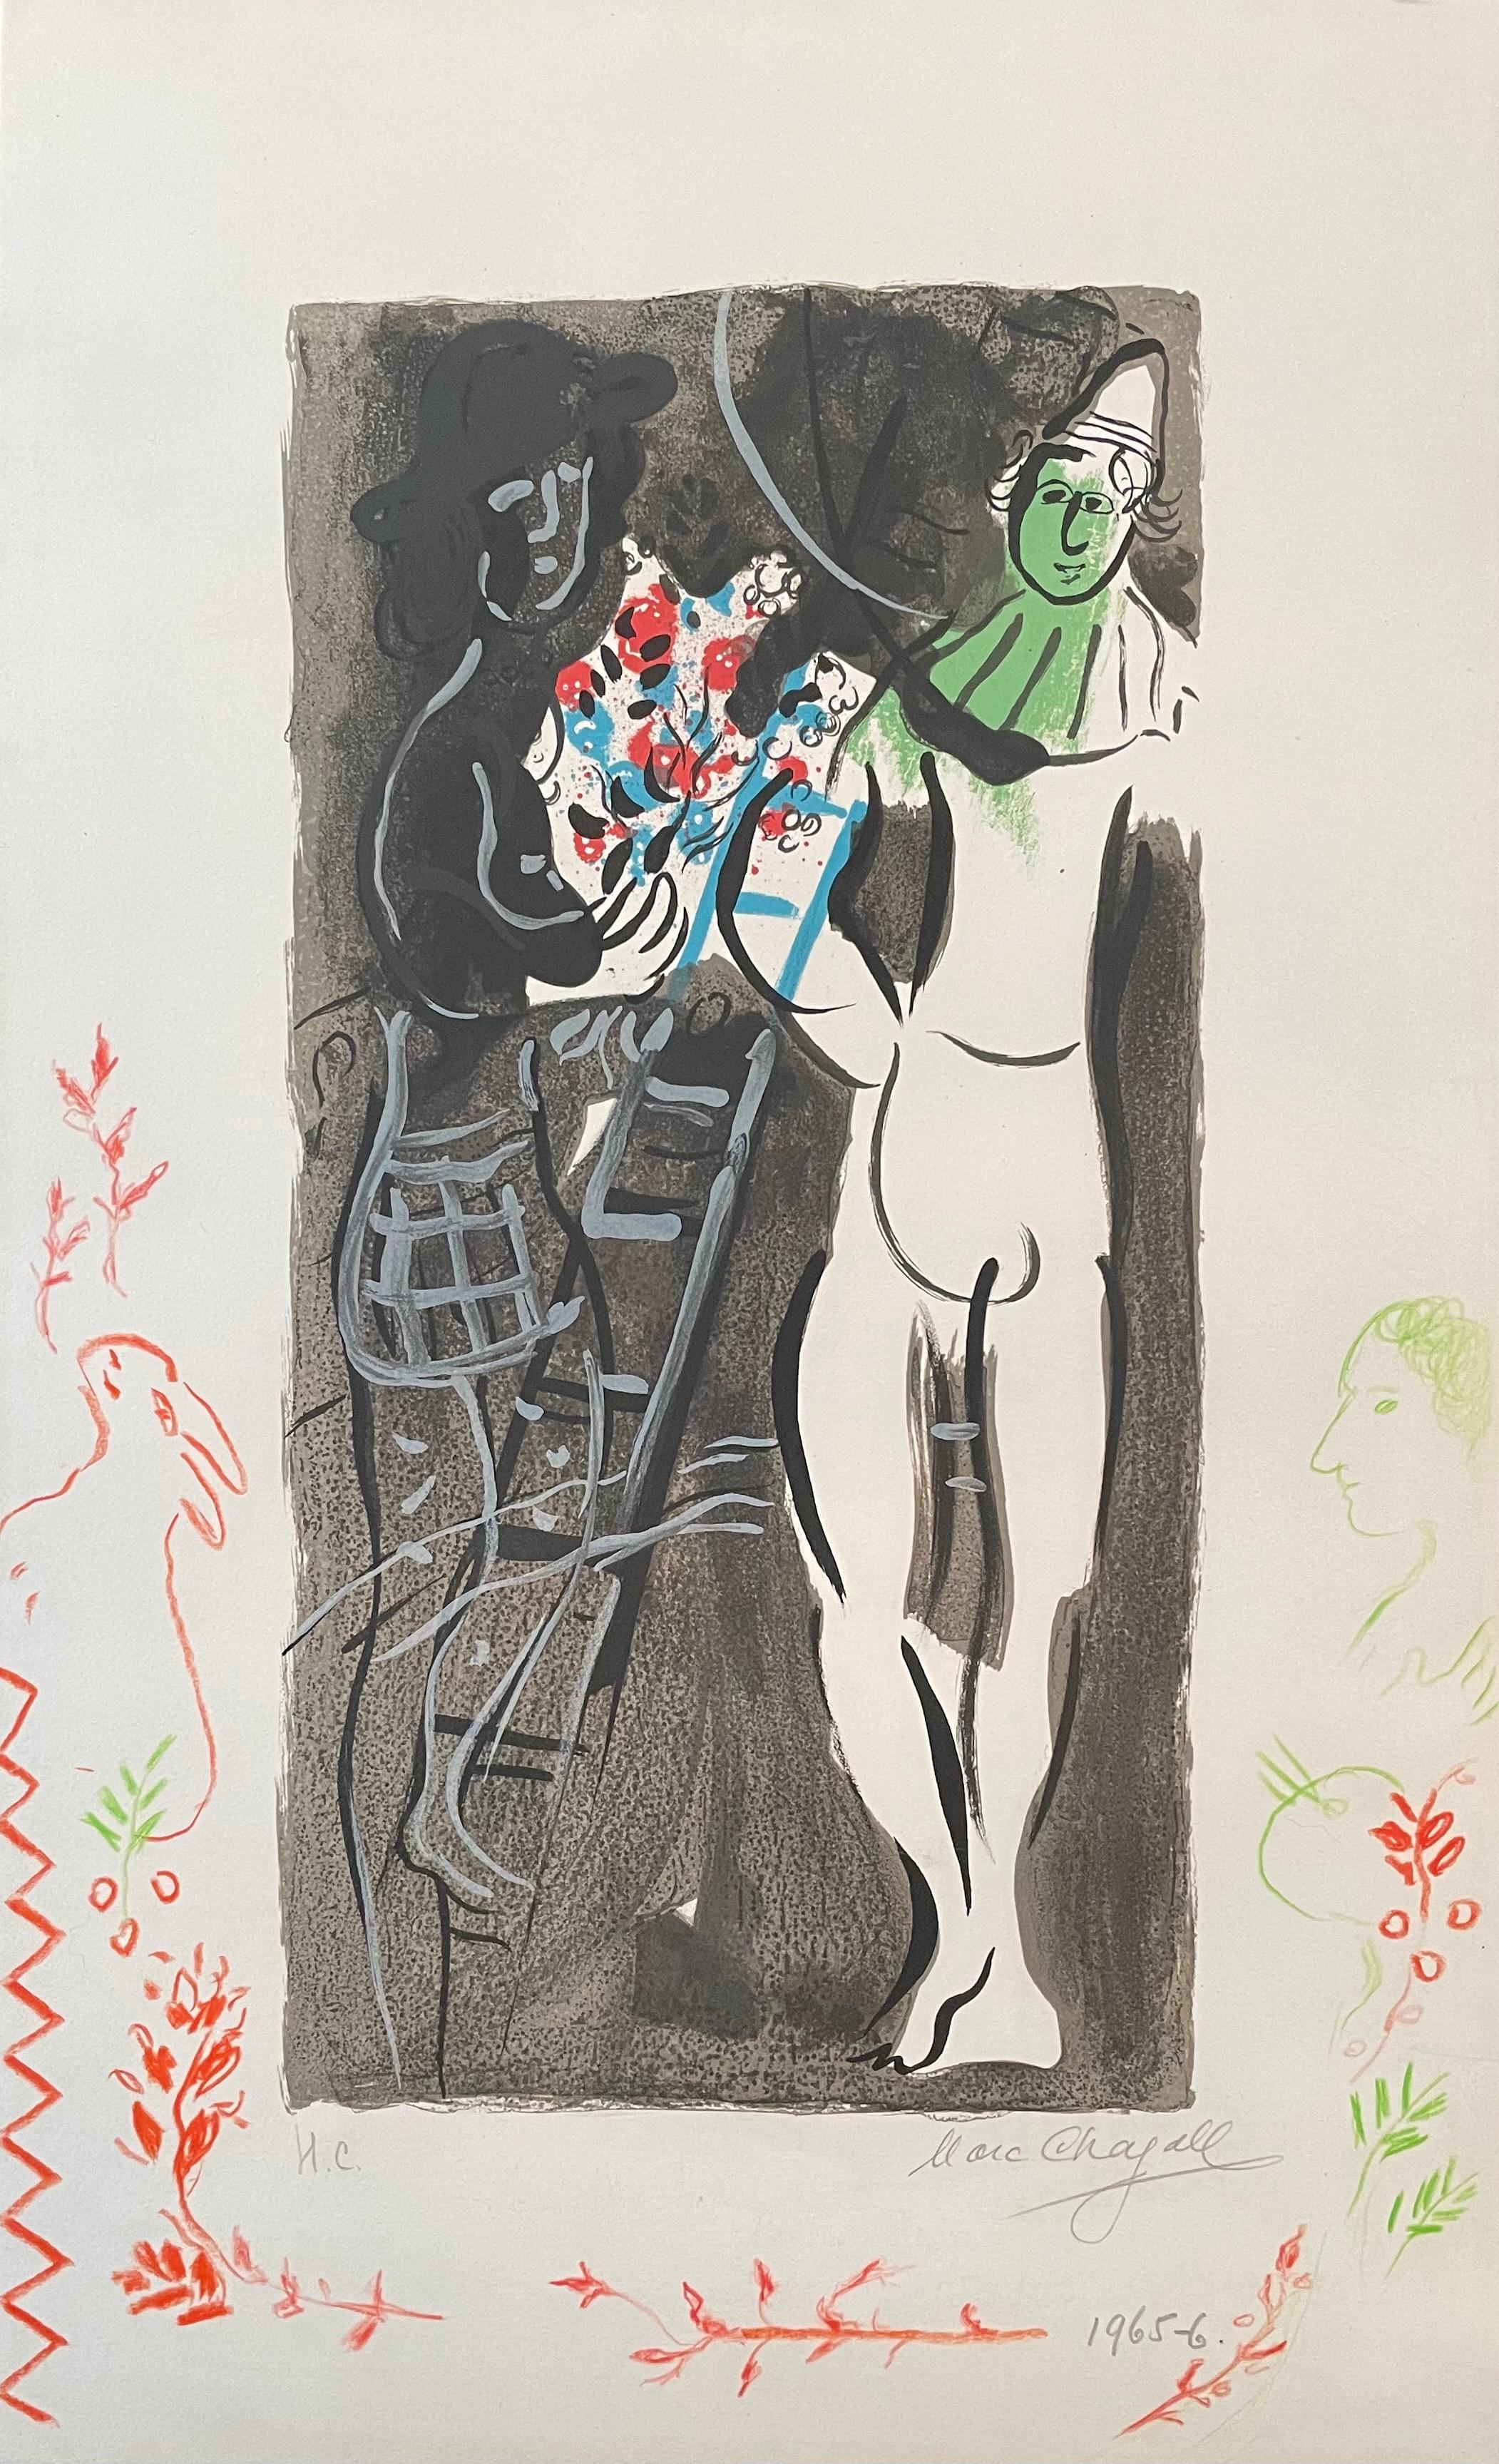 Marc Chagall, "Entree en piste"